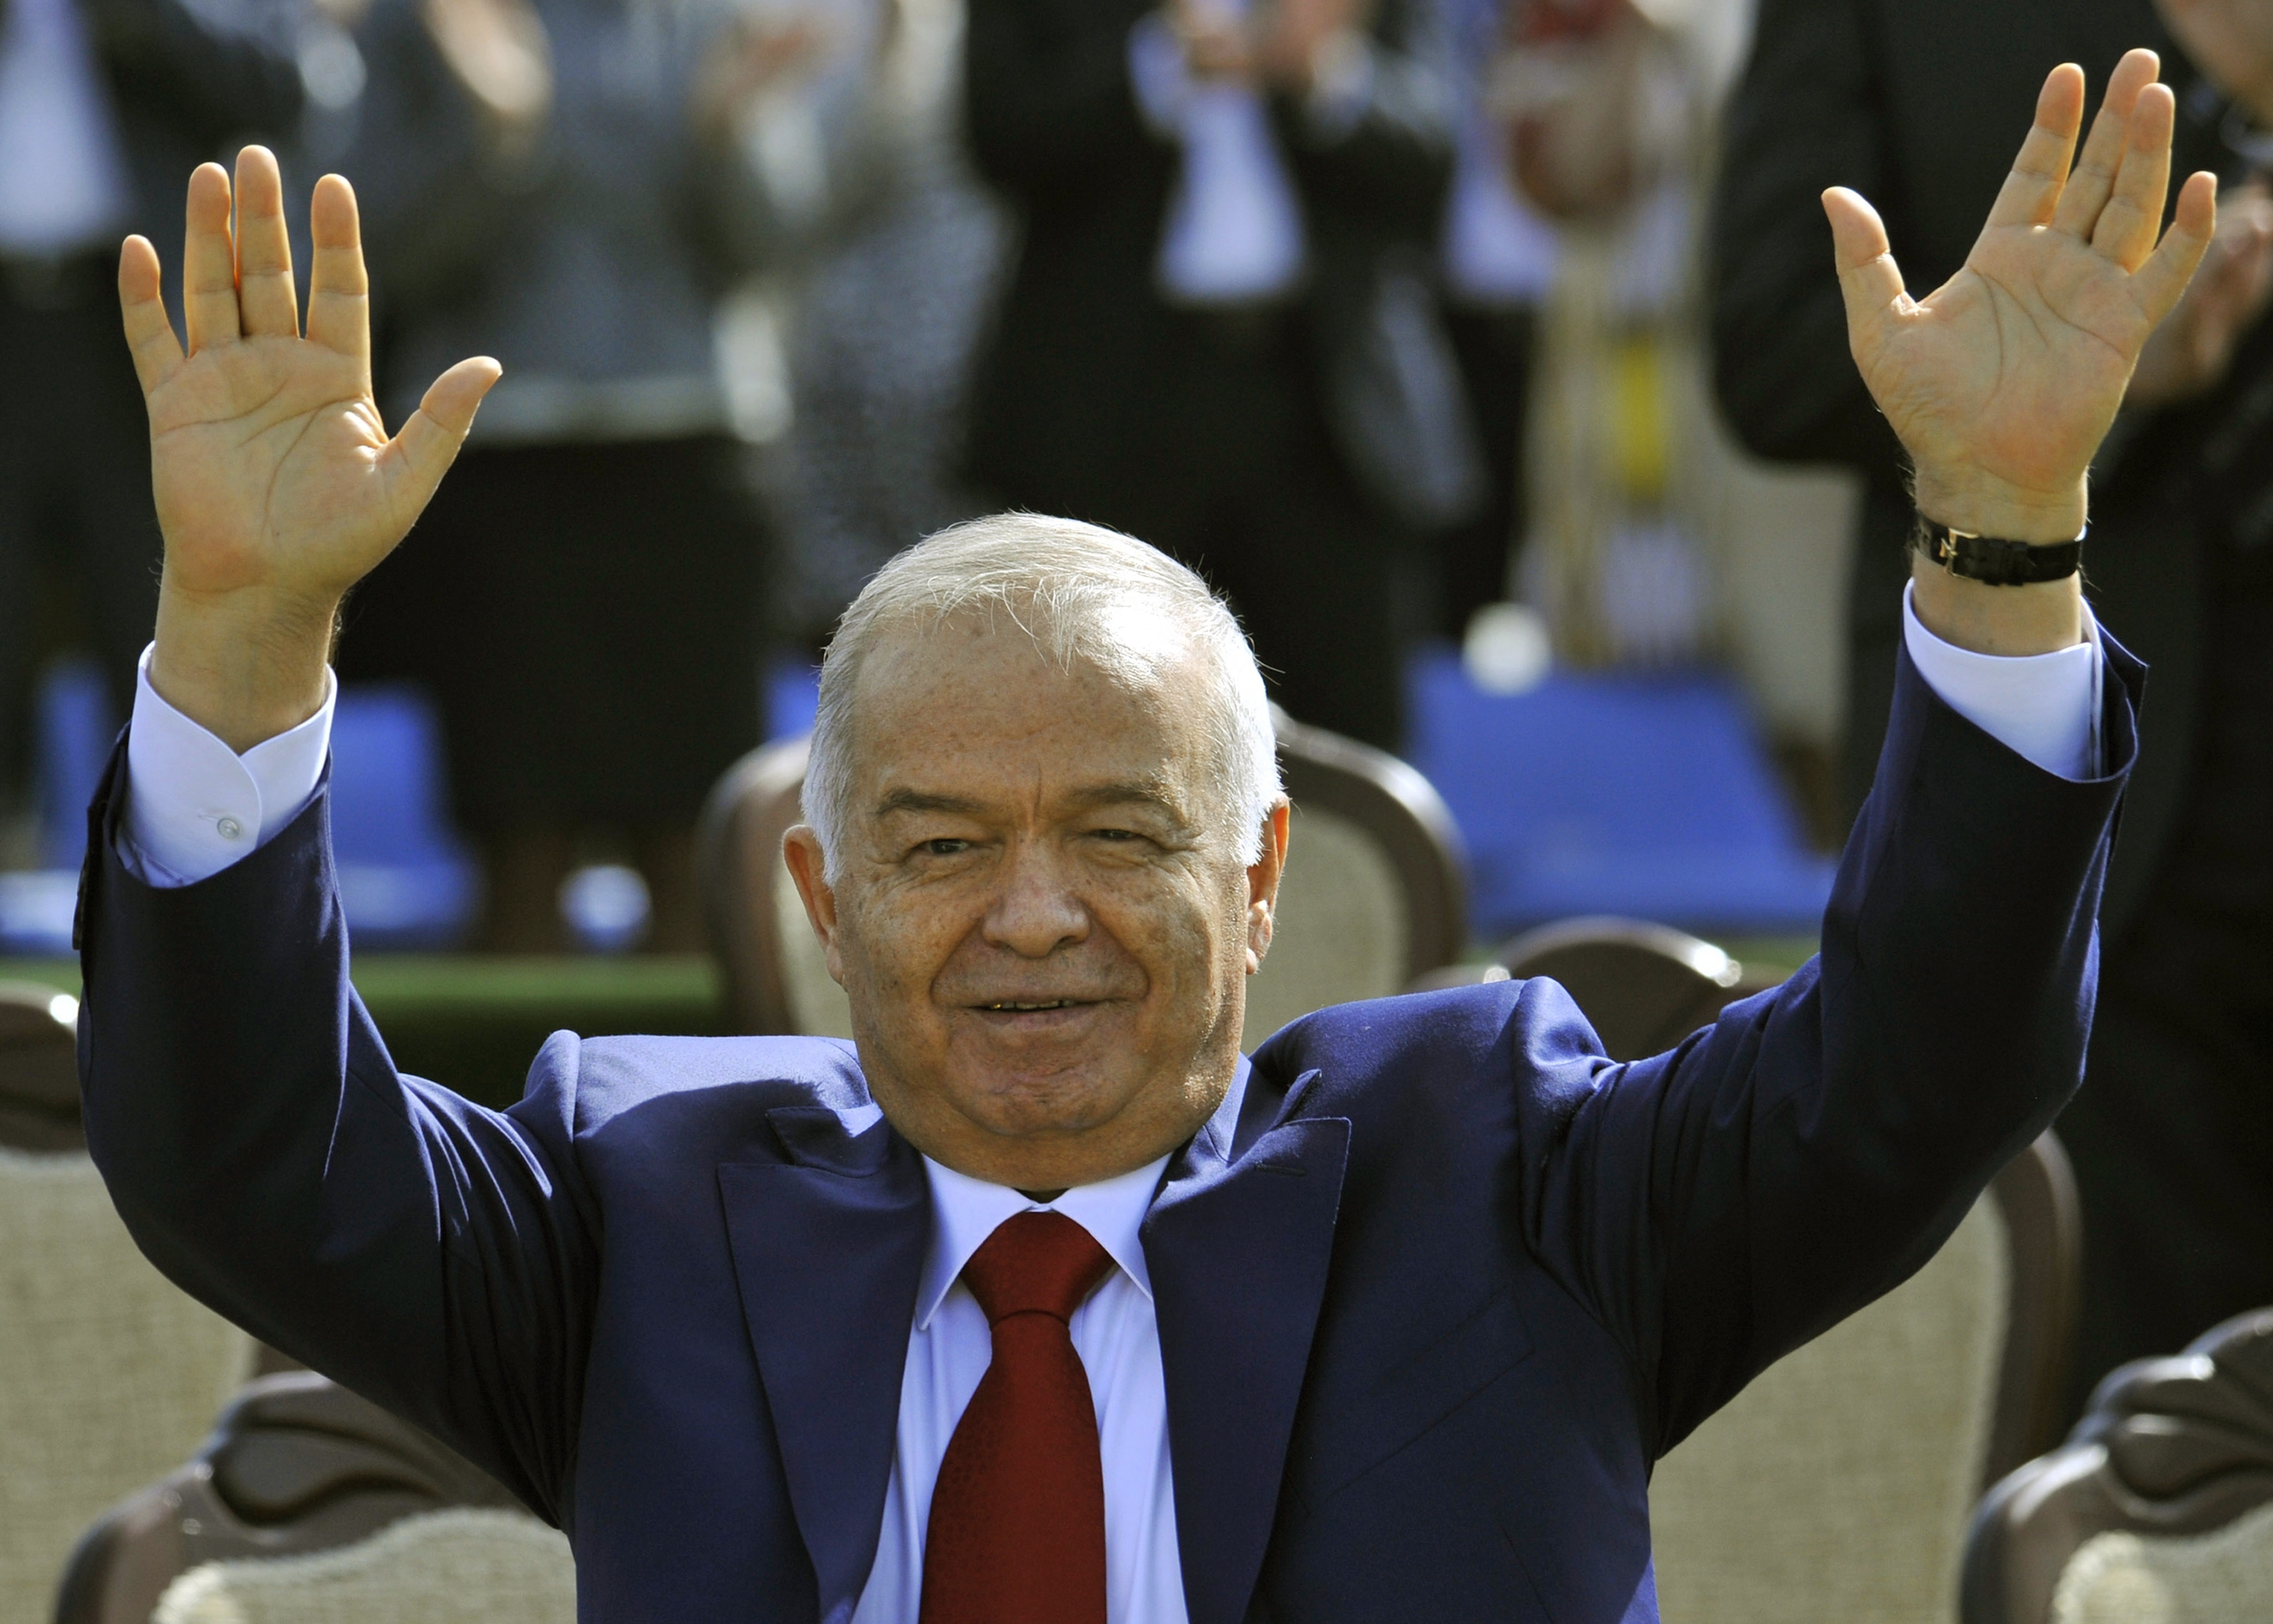 Uzbekistan's President Islam Karimov greets people during the festivities marking the Navruz holiday in Tashkent, Uzbekistan, 21 March 2015.